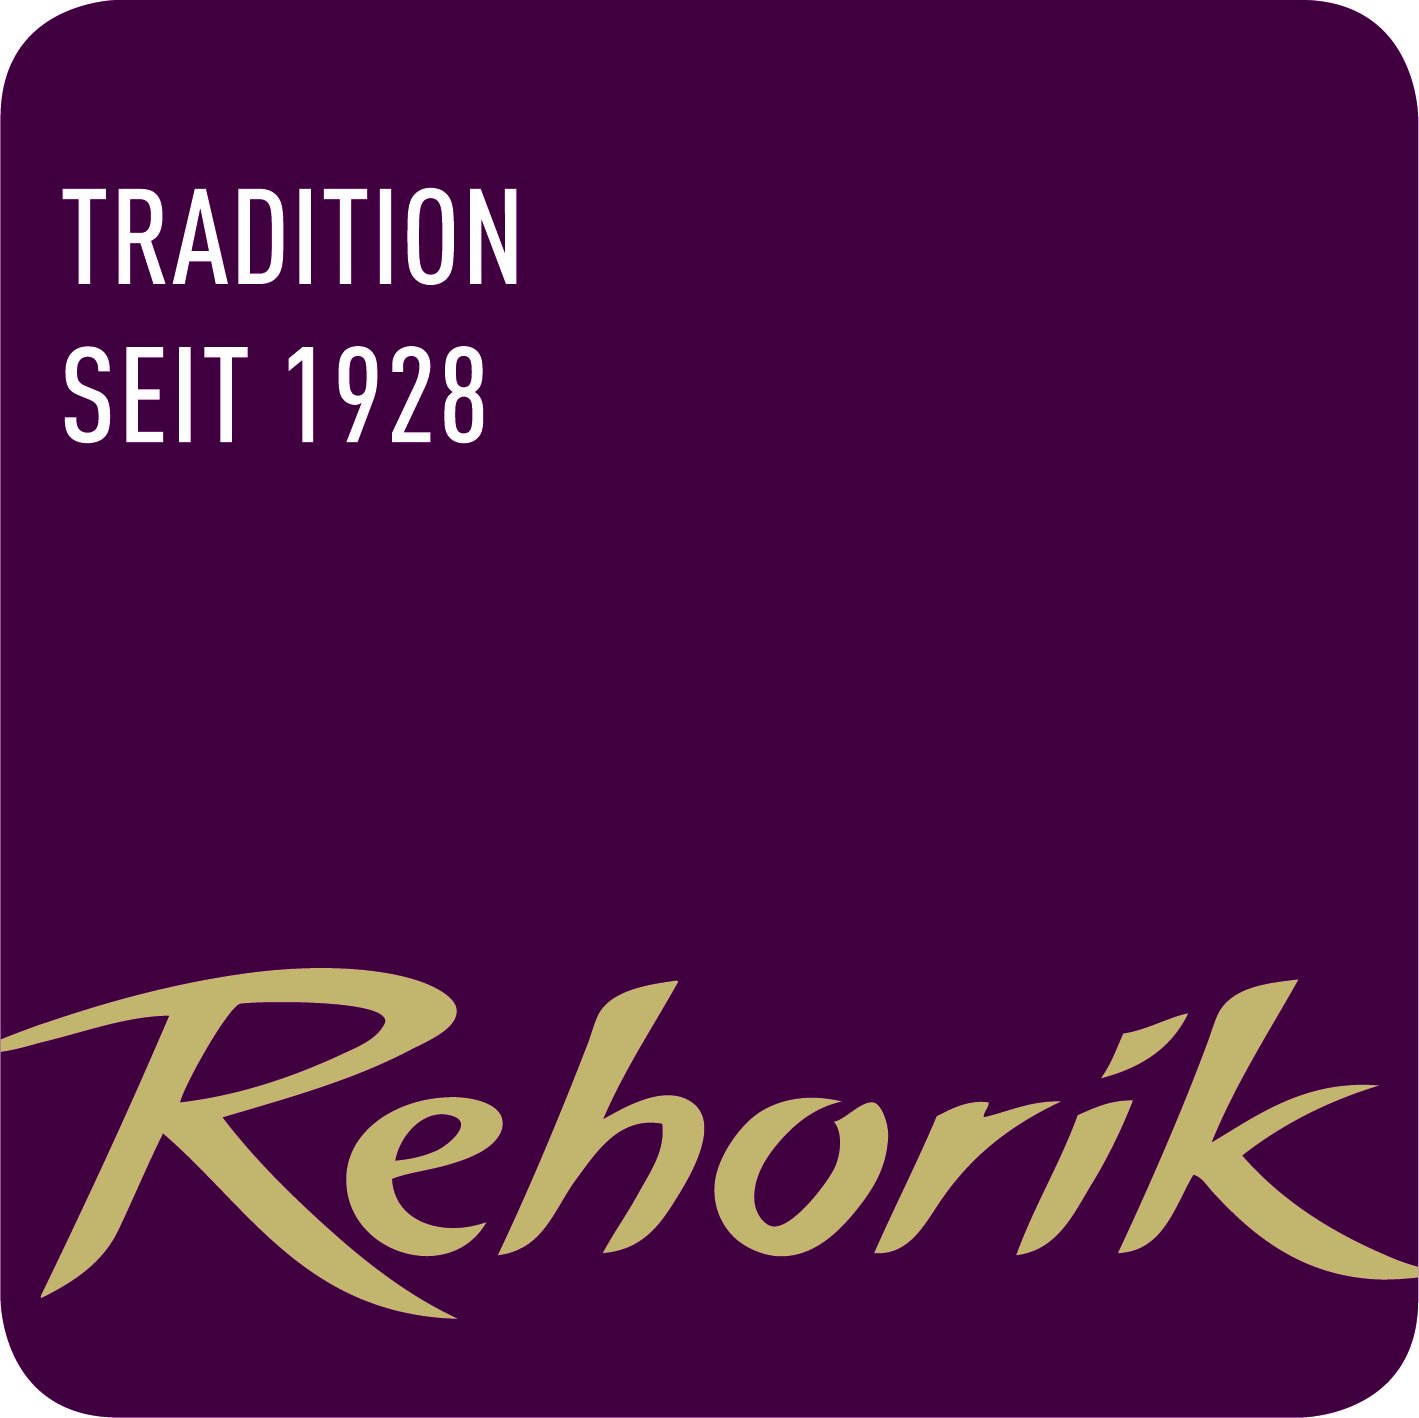 Rehorik - Tradition seit 1928 - Logo weinrot 2019_Rehorik Logo 2019 VEKTOR